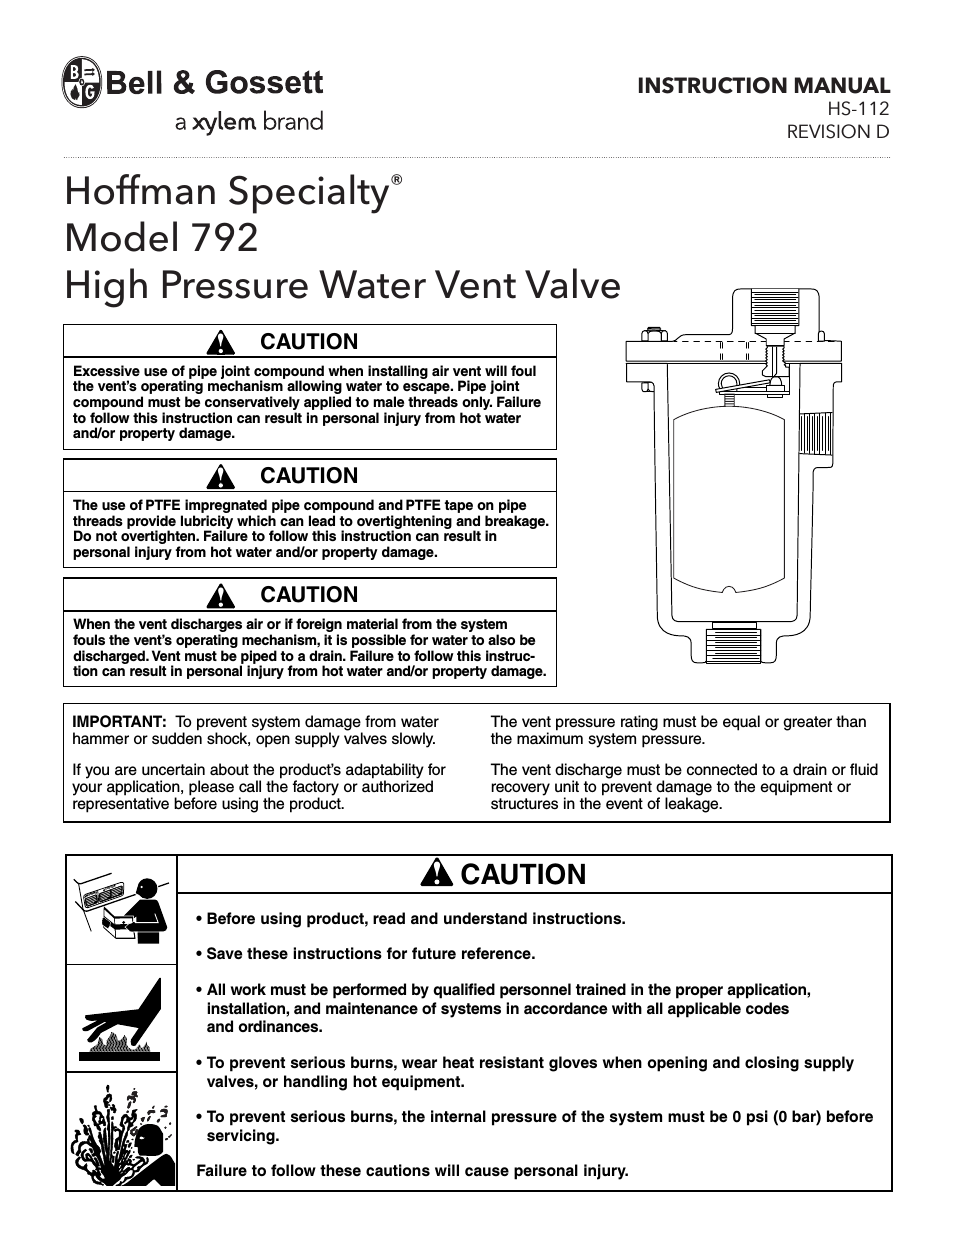 HS 112D 792 High Pressure Water Vent Valve